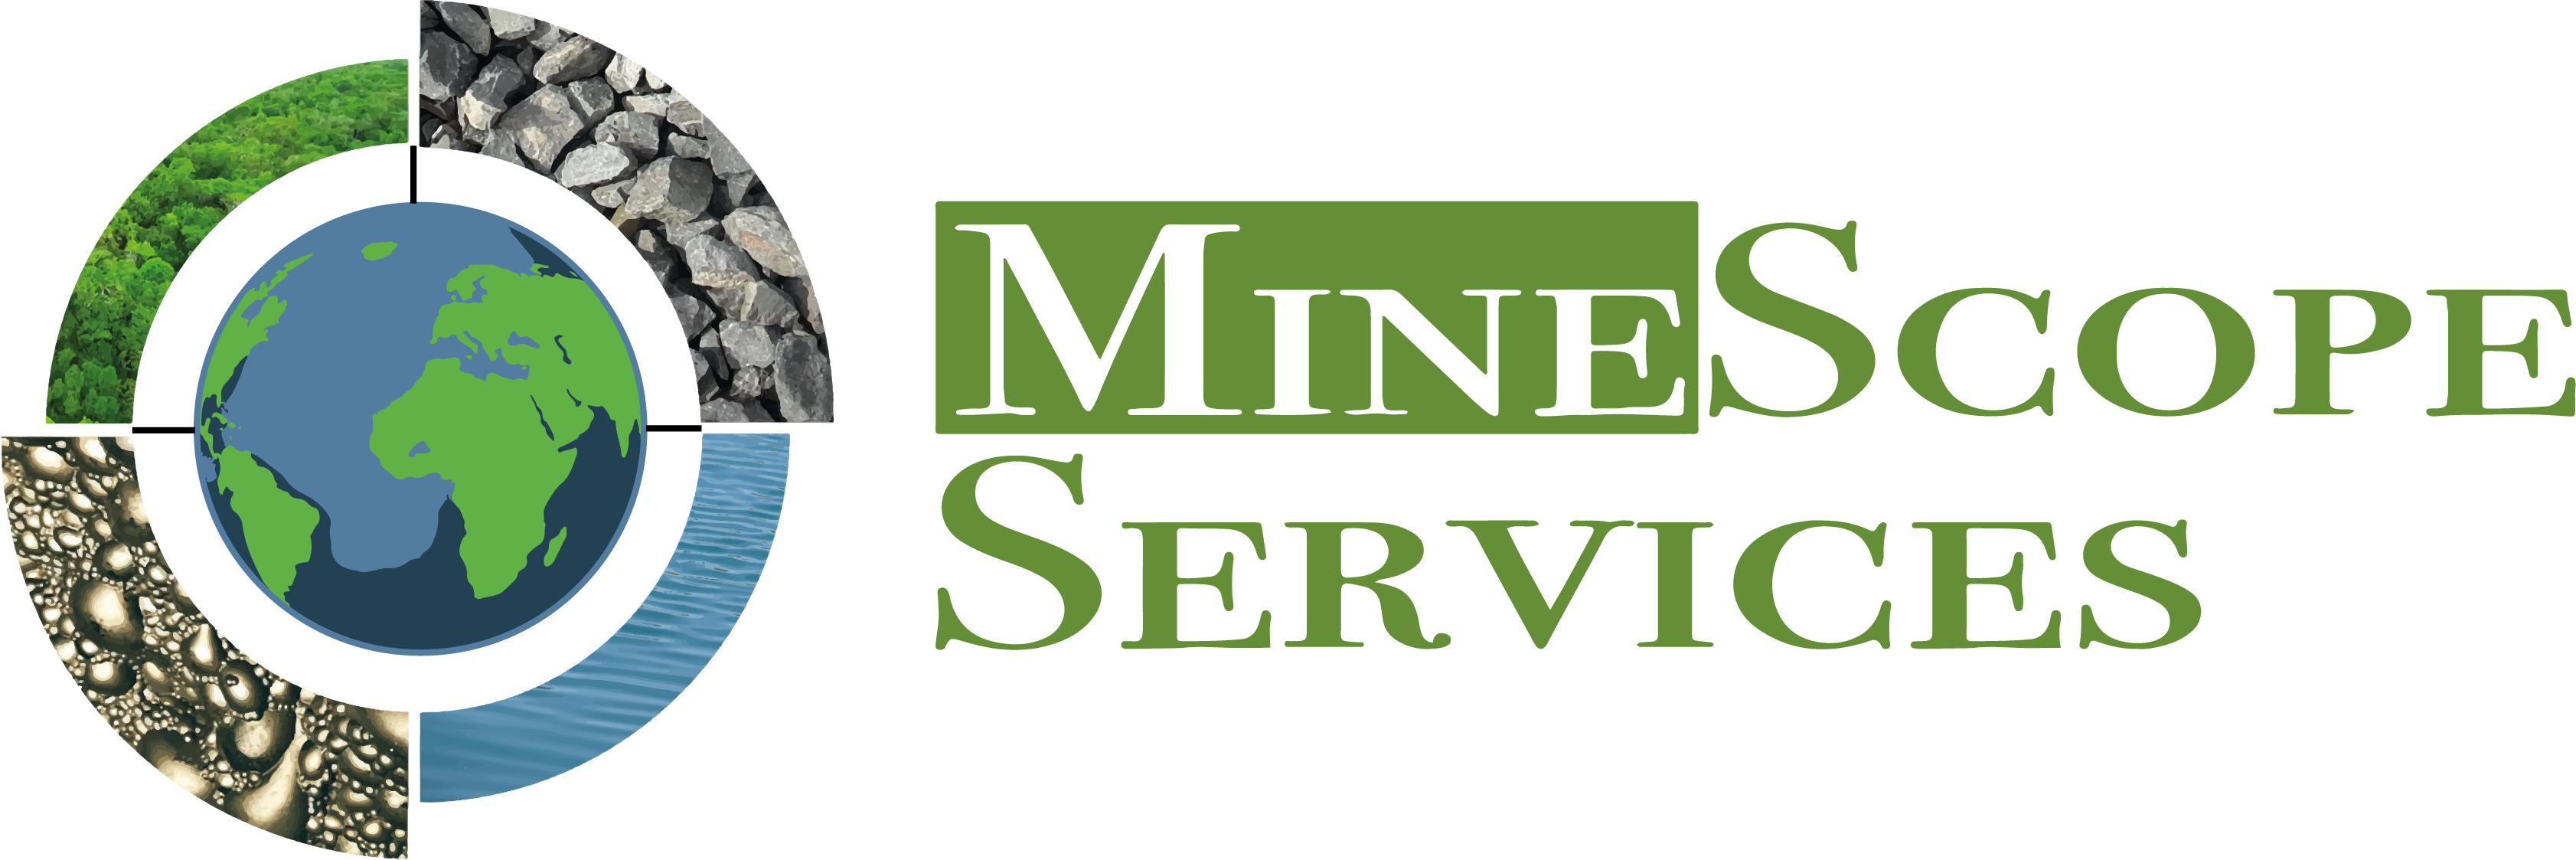 Minescope Services